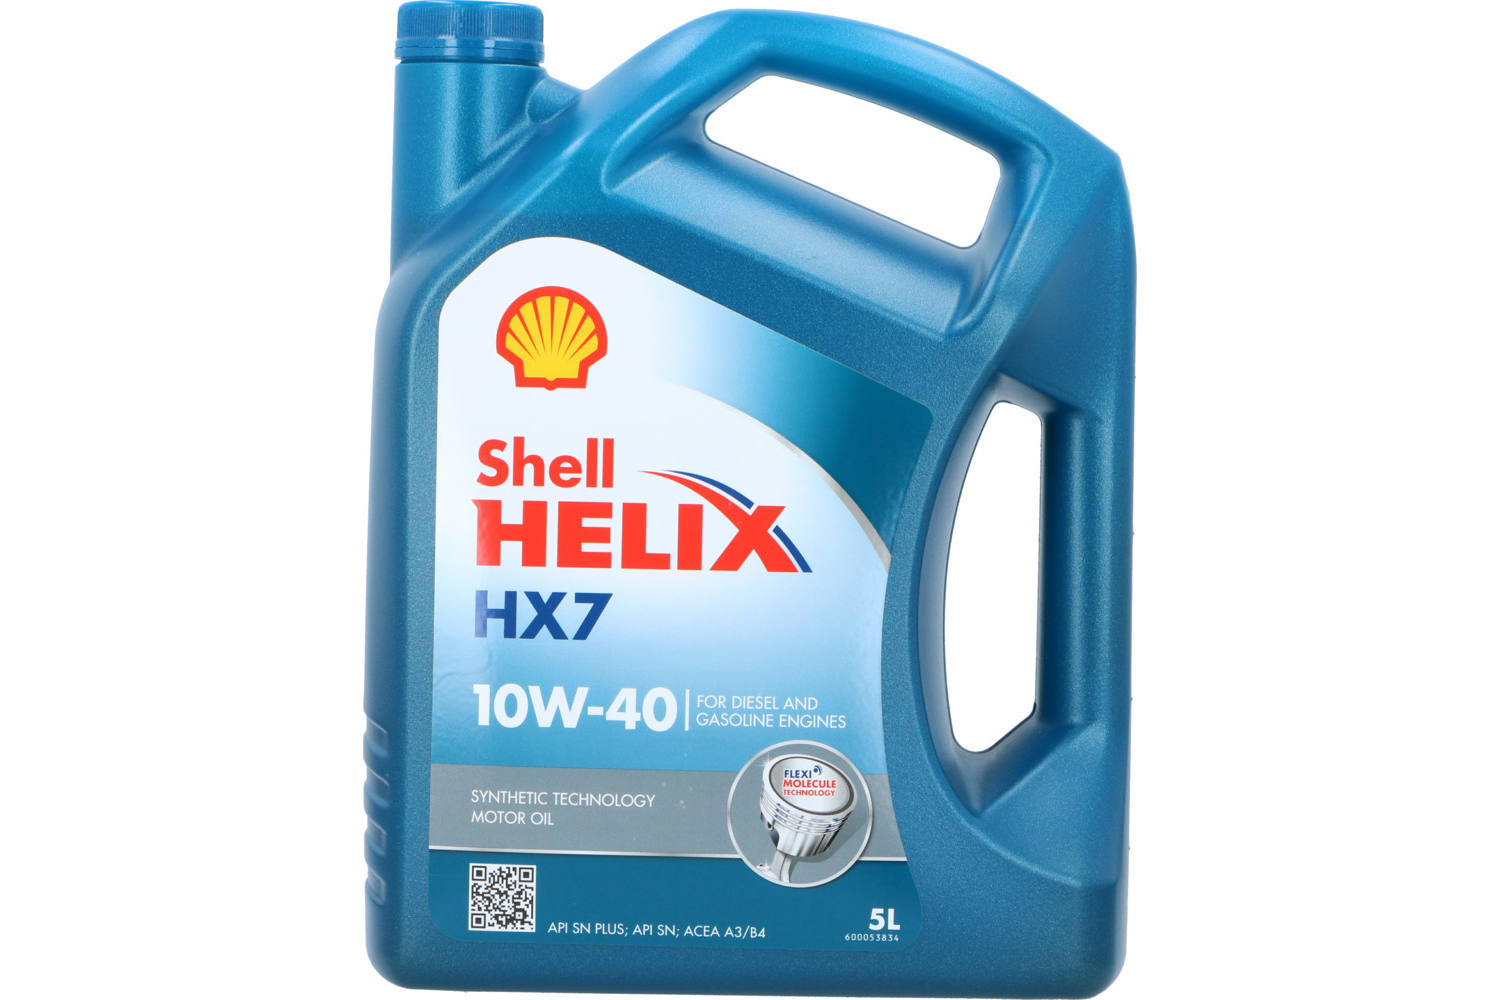 Motorolie, Shell Helix, 10W40, HX7, 5l 2